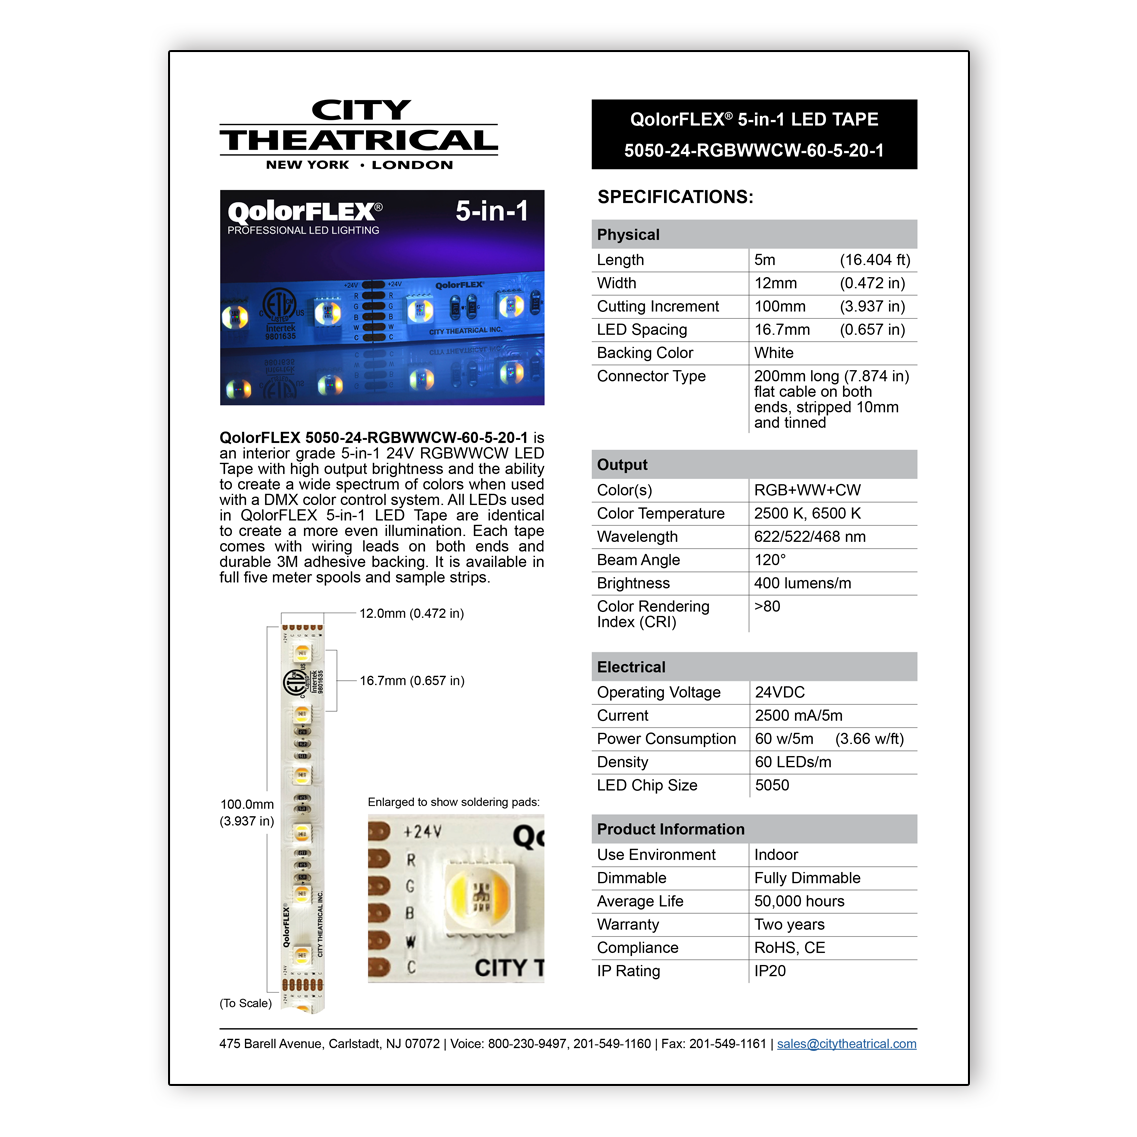 QolorFLEX 5-in-1 LED Tape Cut Sheet download